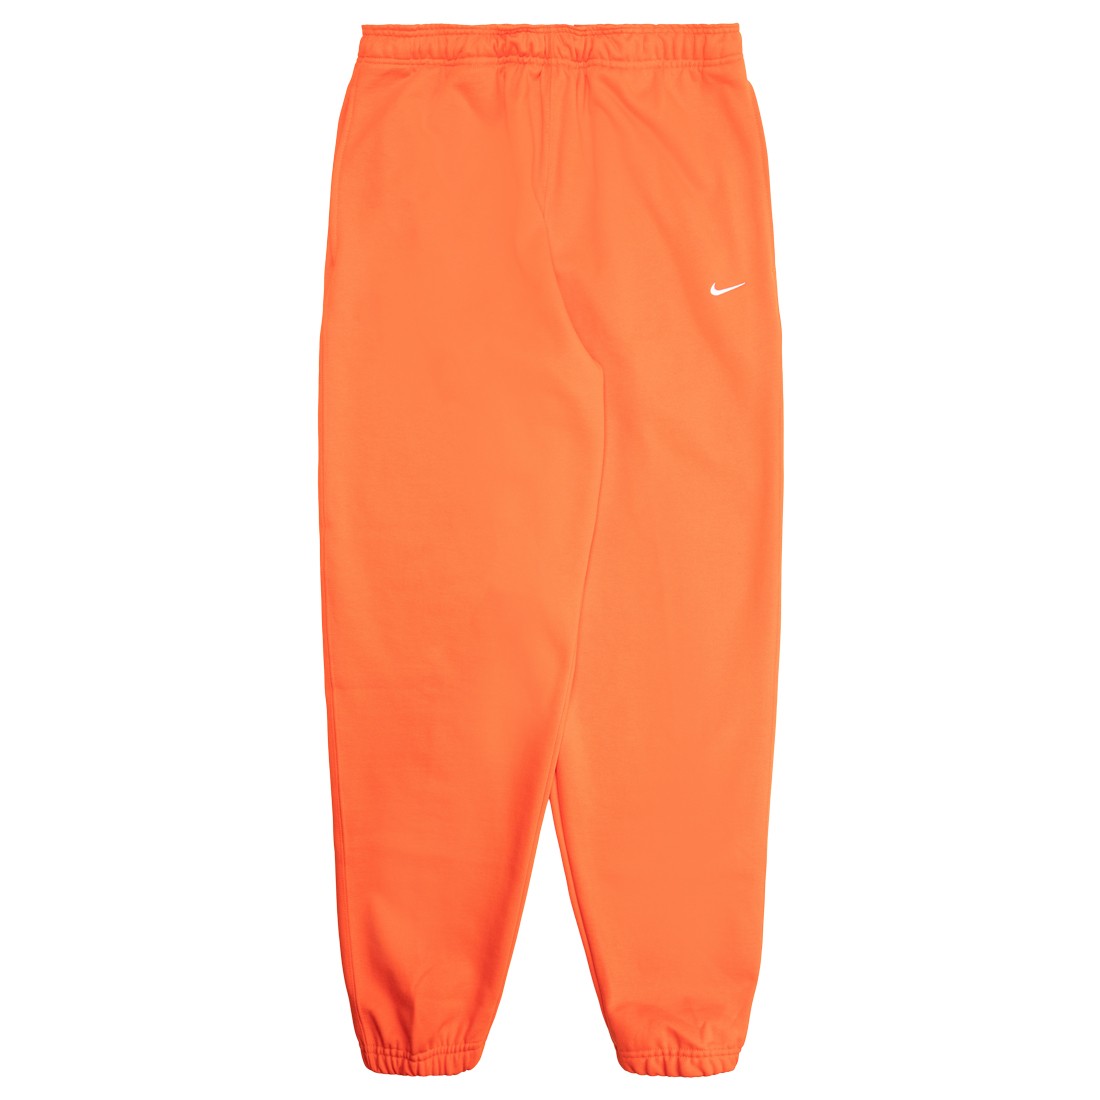 nike men made in the usa fleece pants team orange white